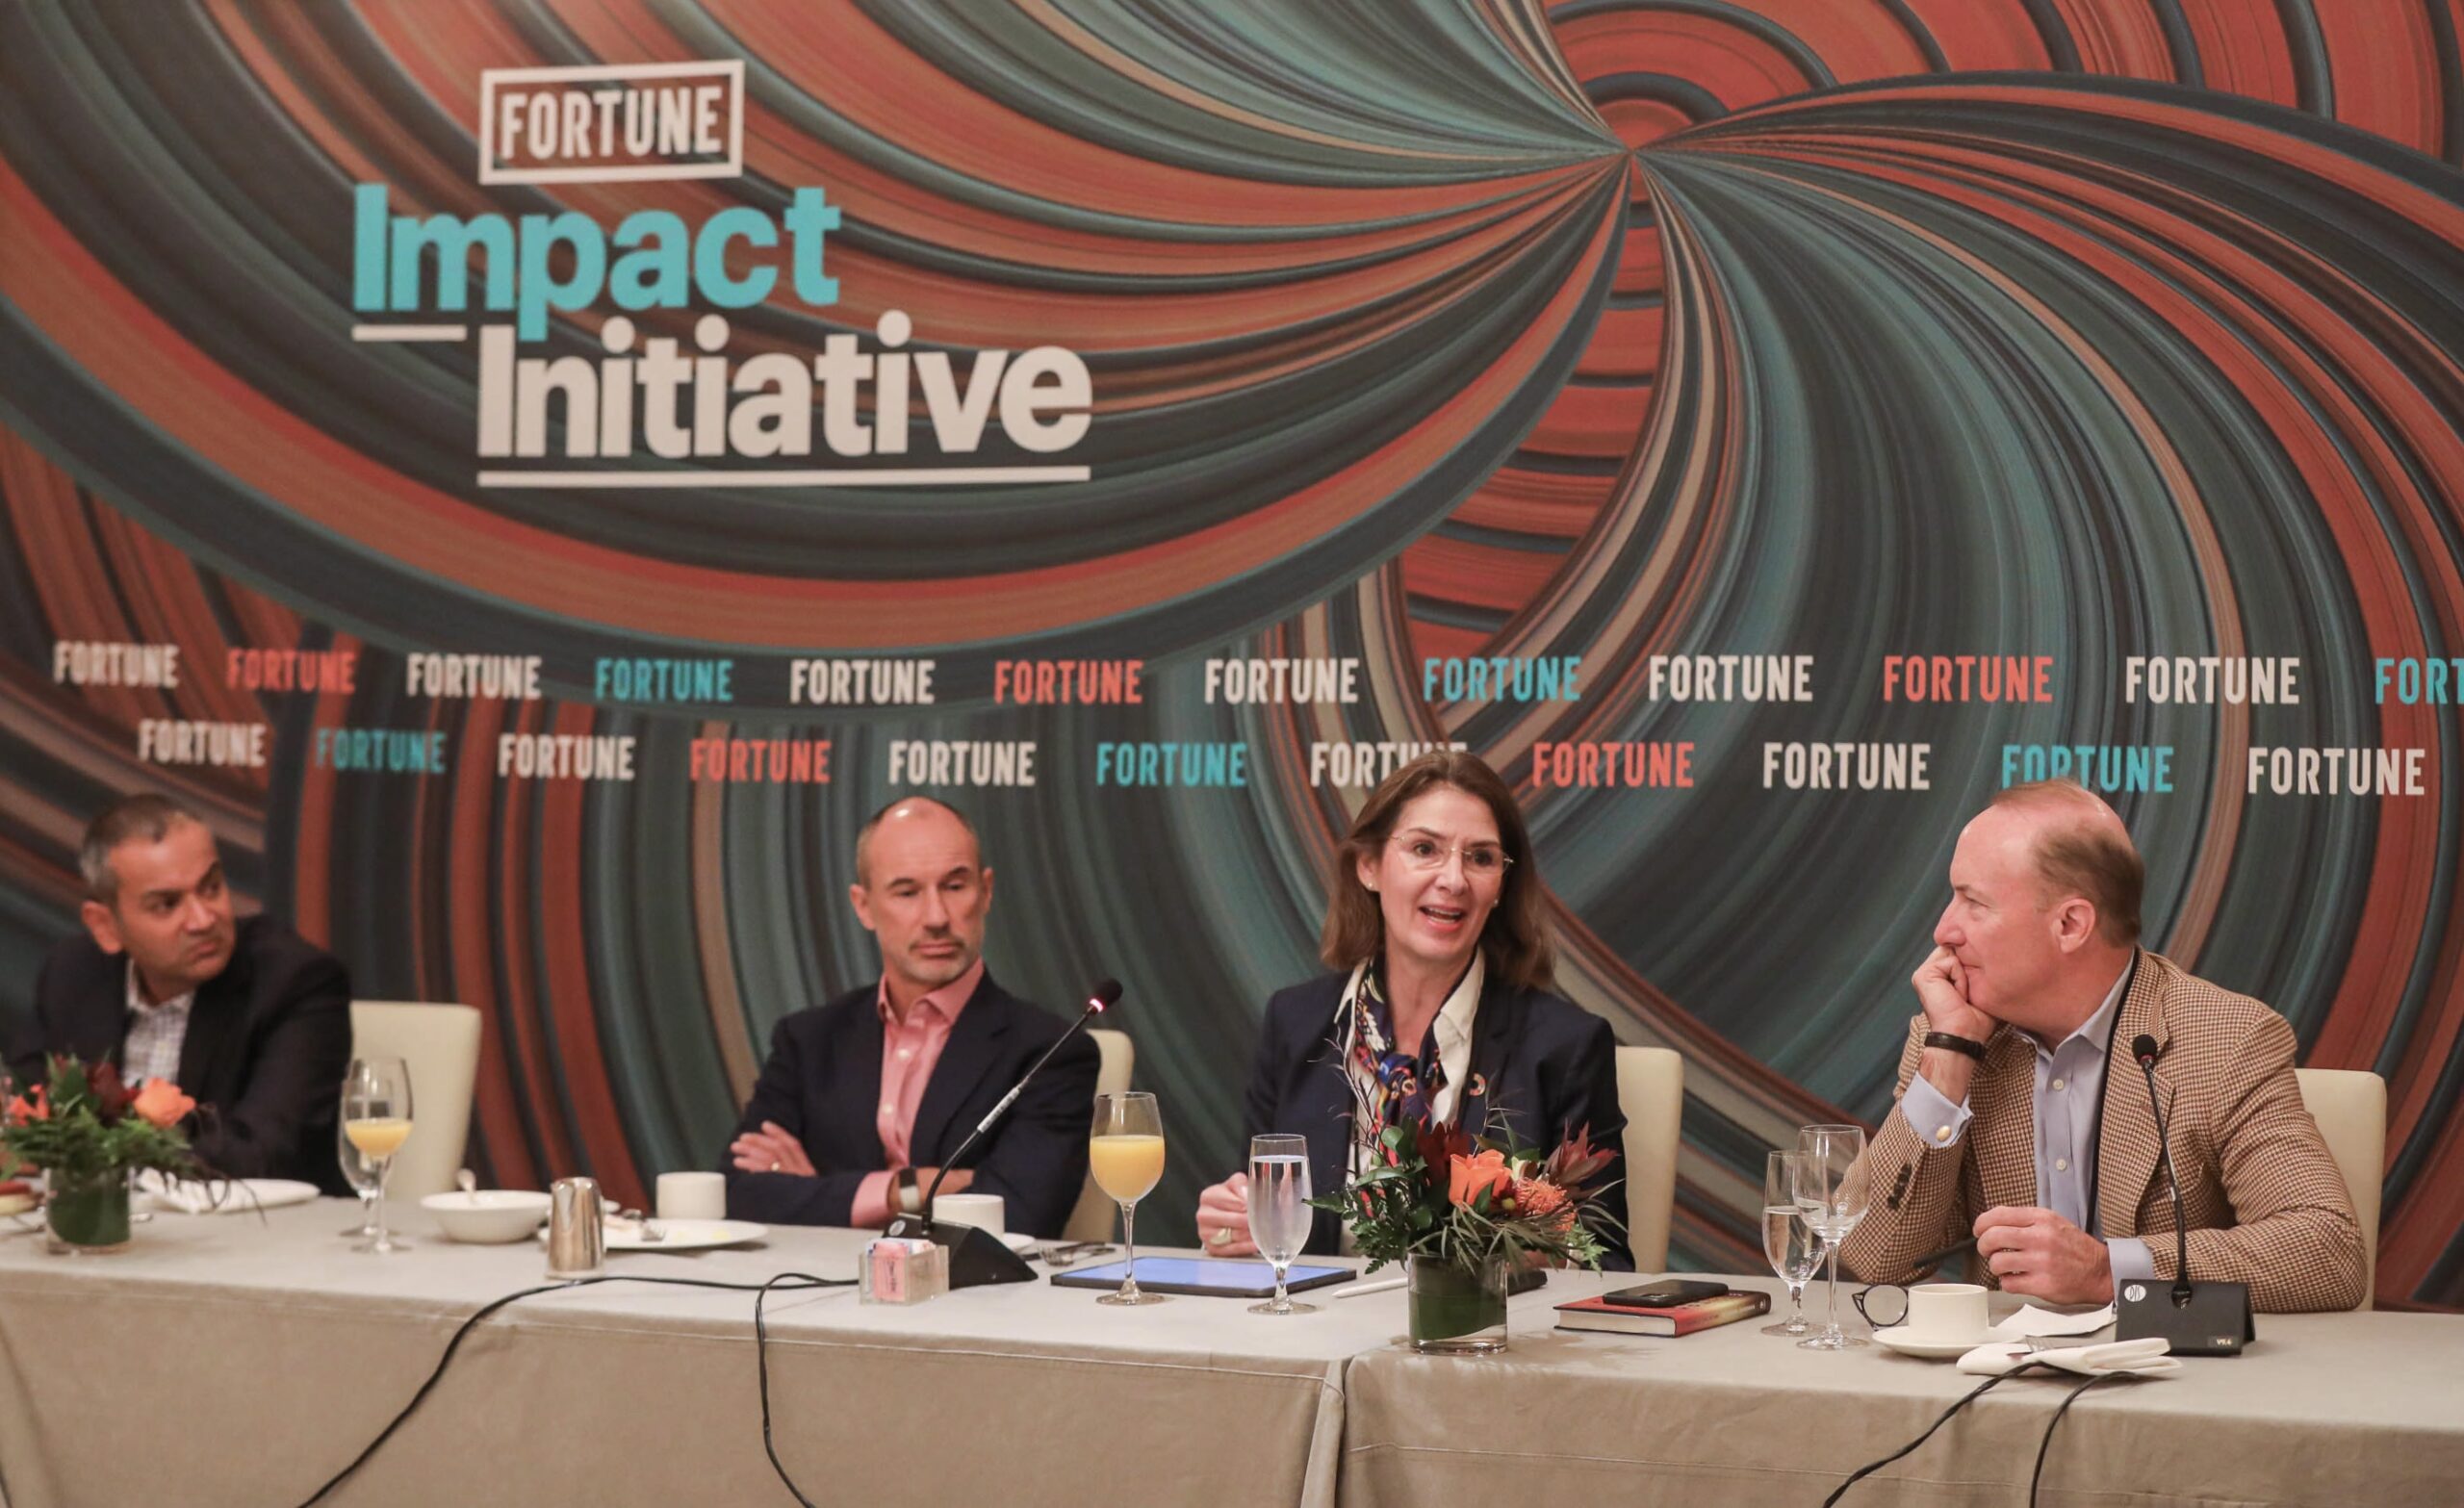 Helle Bank Jorgensen speaking at the Fortune Impact Initiative panel in Atlanta.